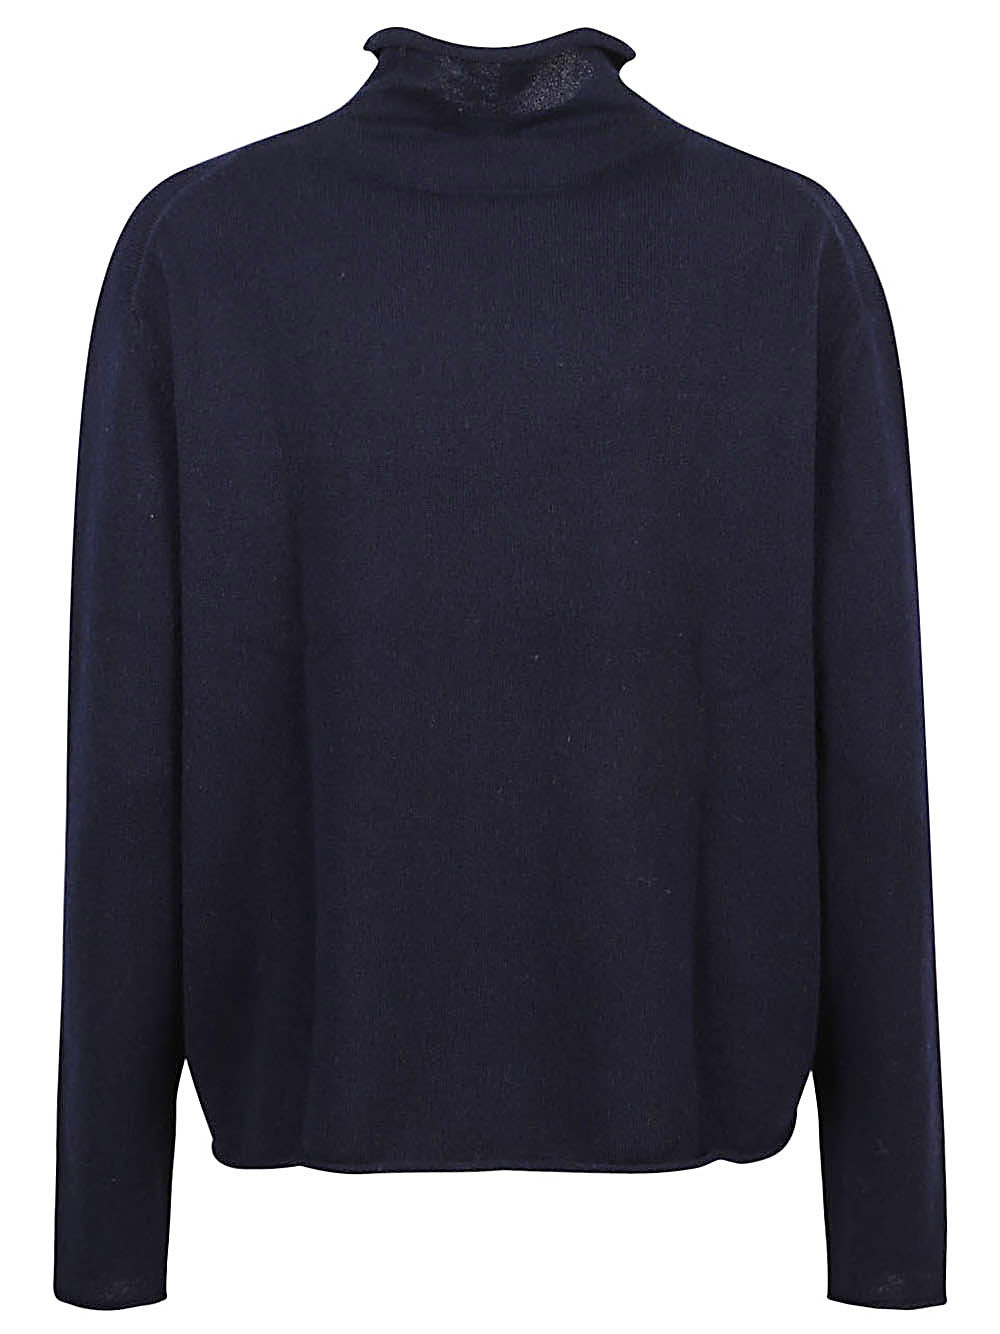 LISA YANG - The Clio Cashmere Sweater Lisa Yang